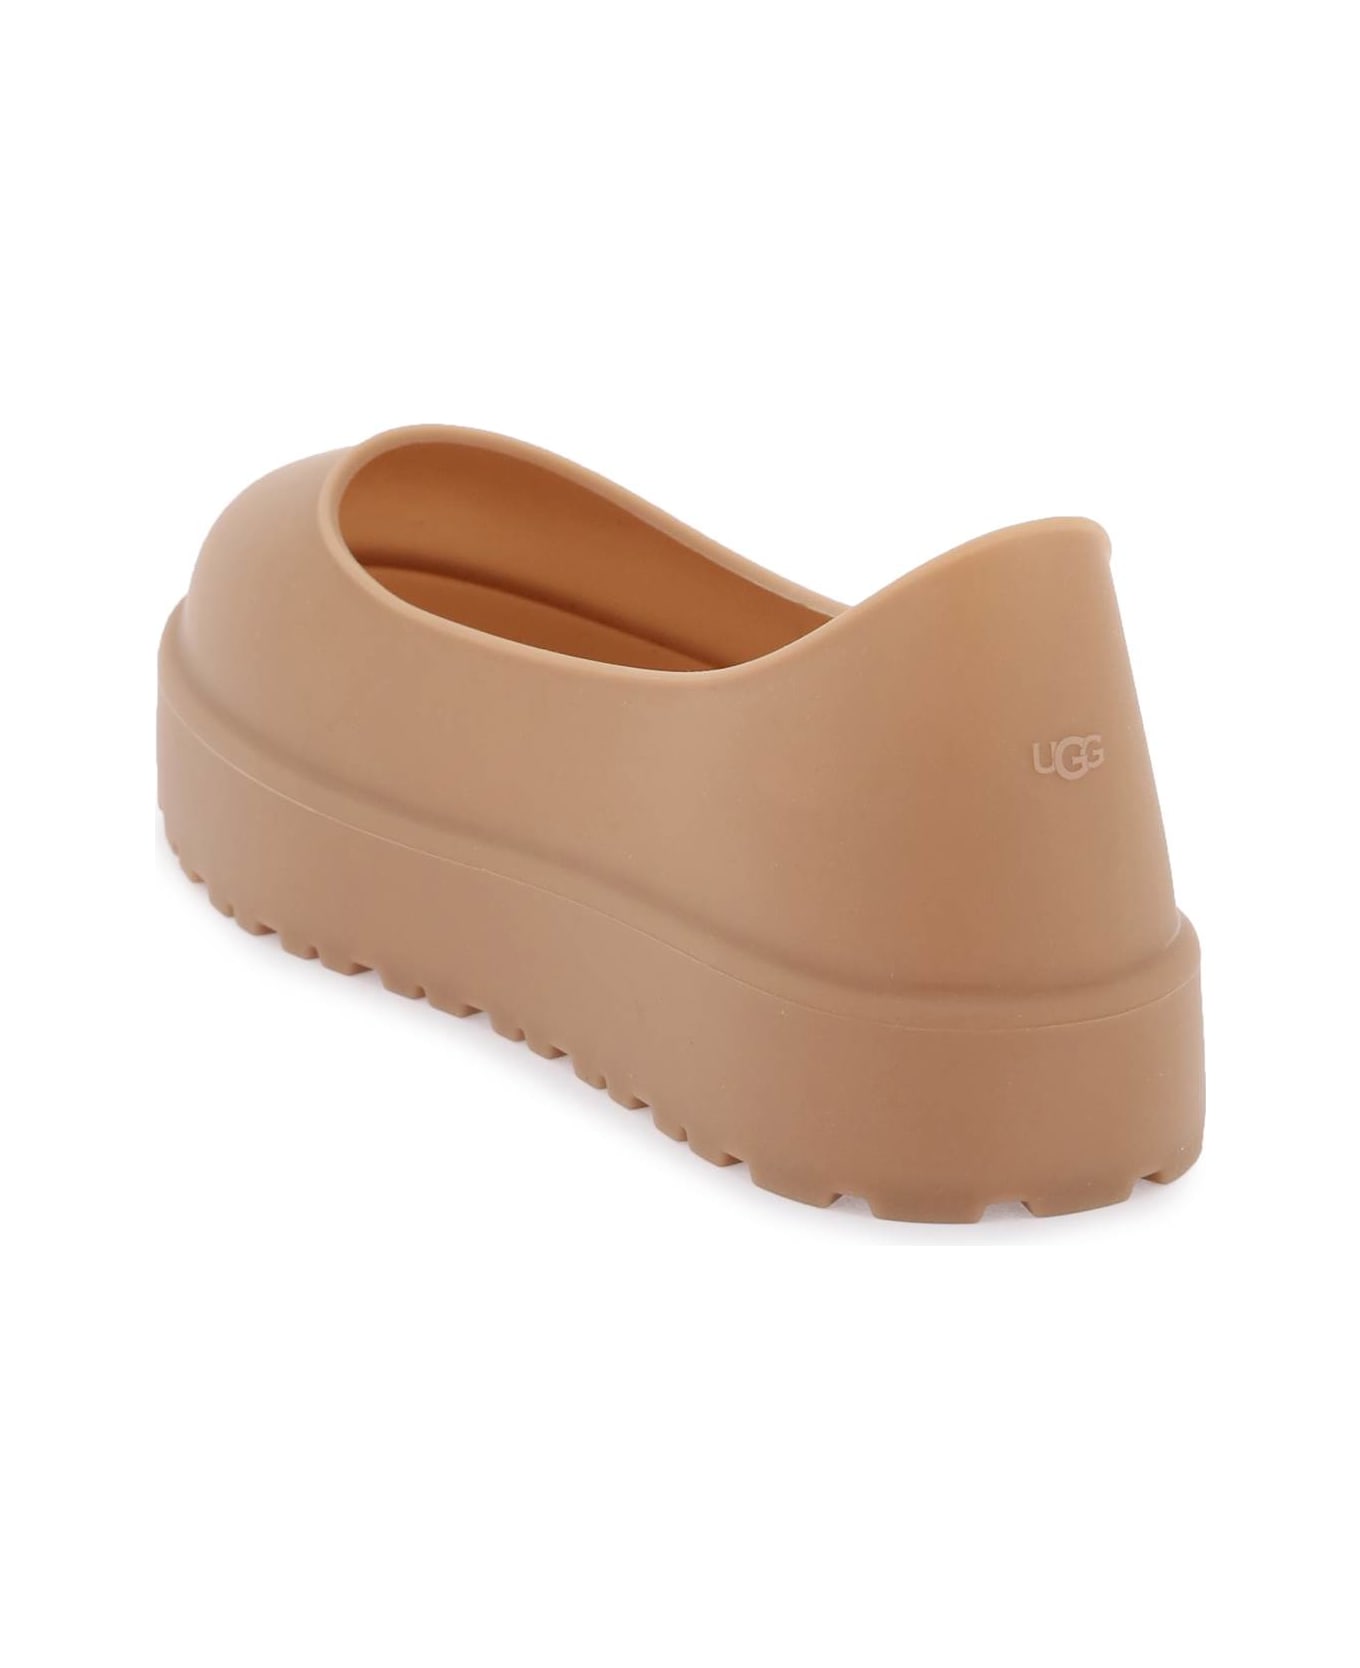 UGG guard Shoe Protection - CHESTNUT (Brown)